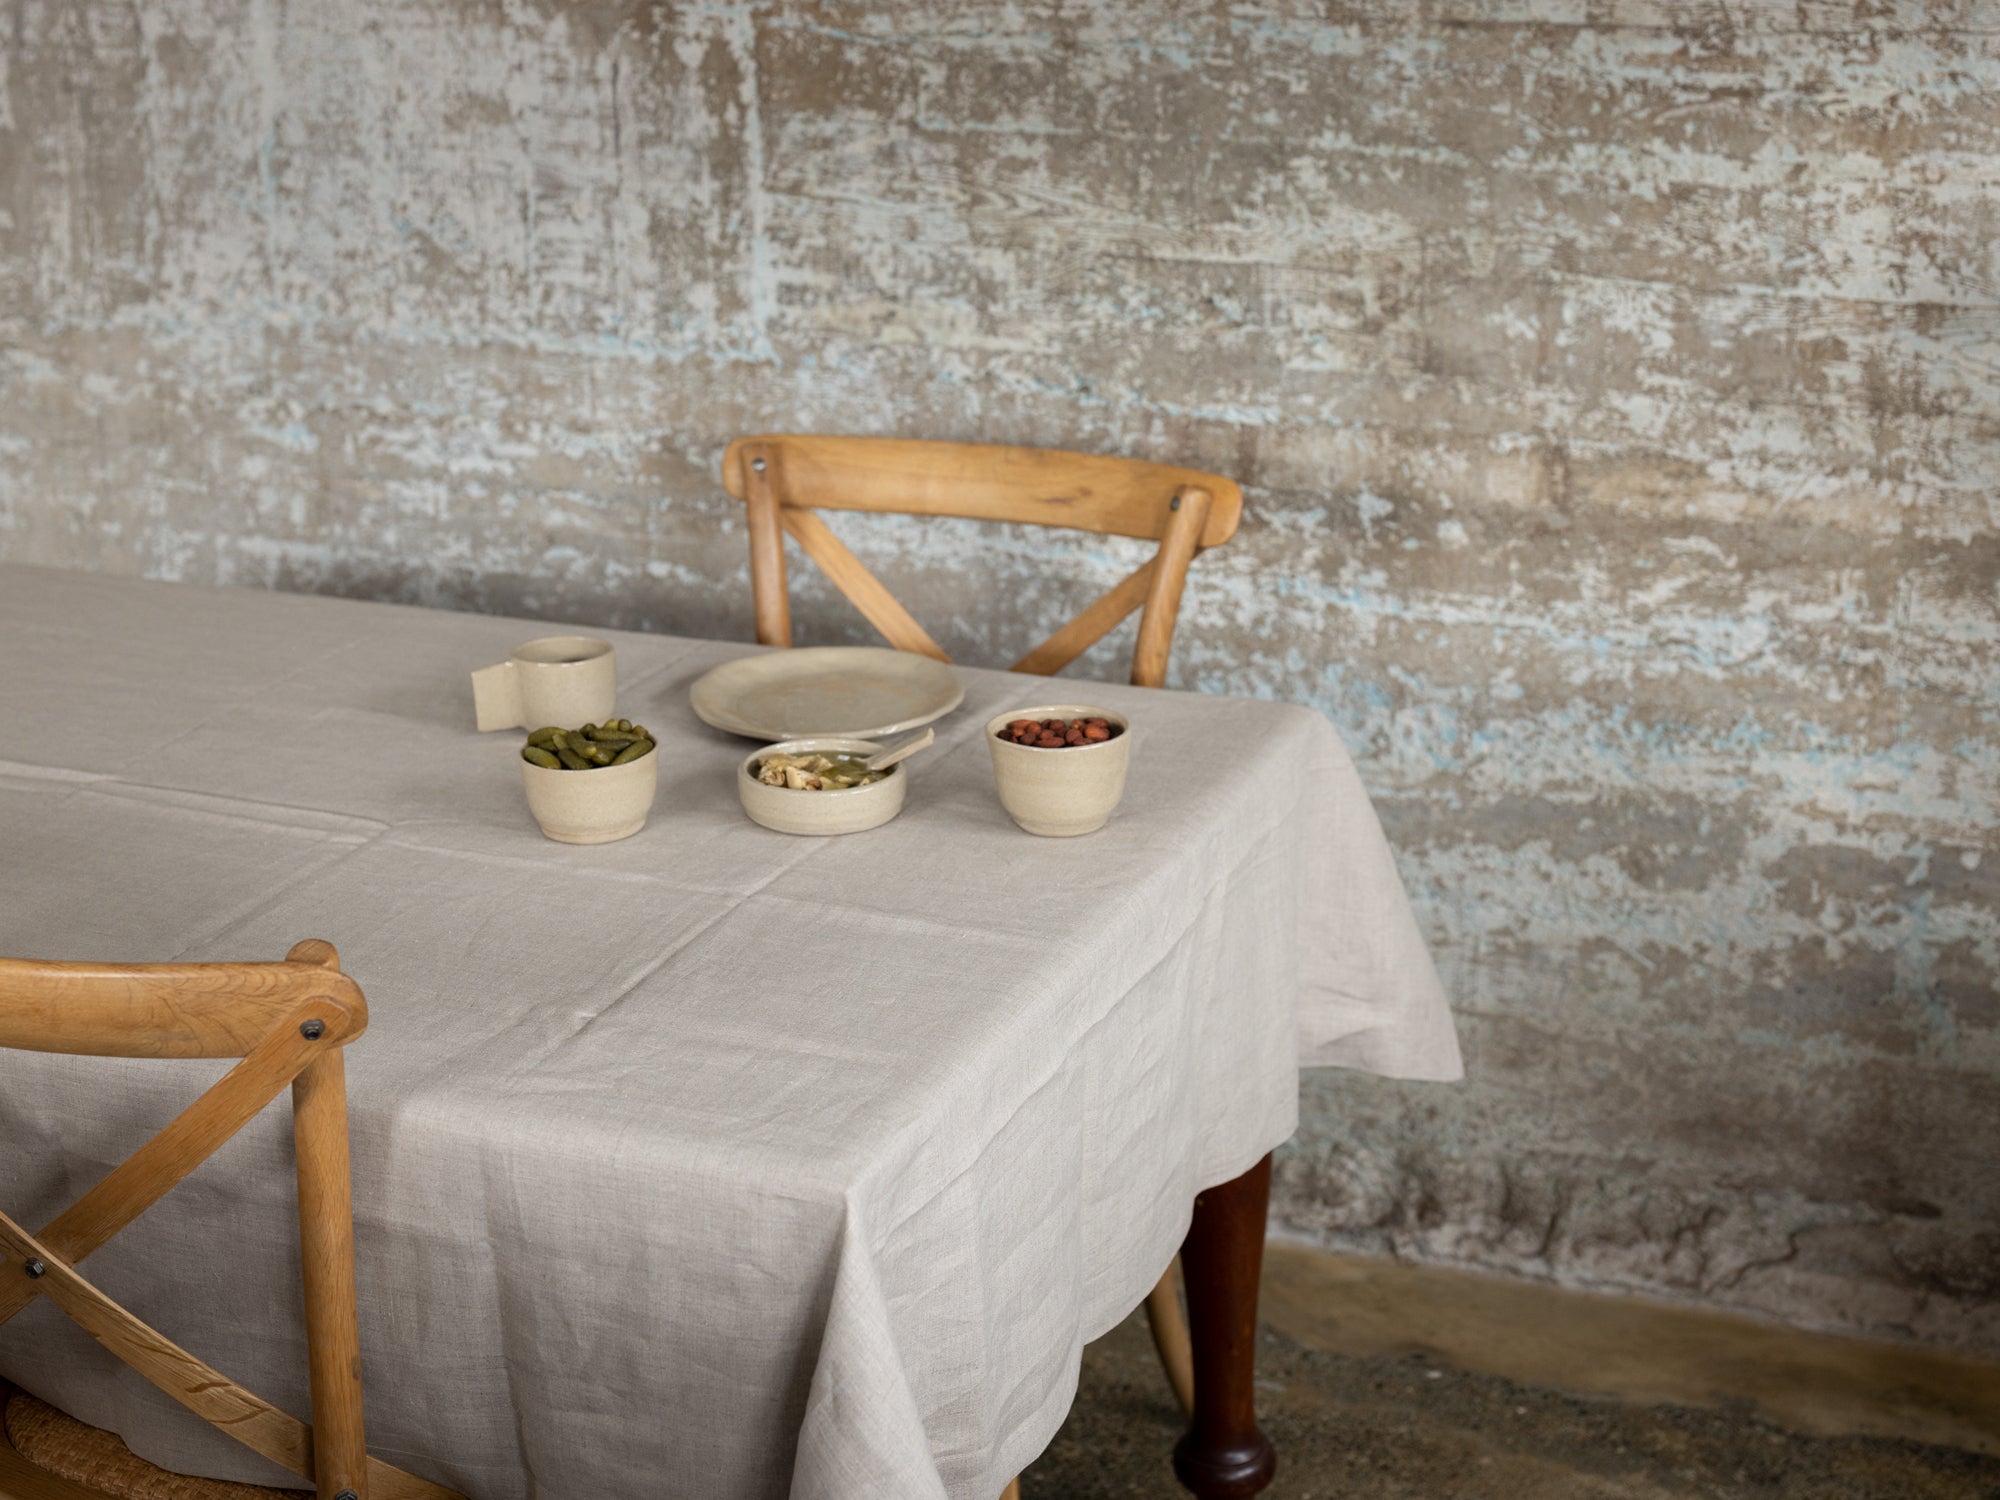 hemp linen tablecloth - clean edge